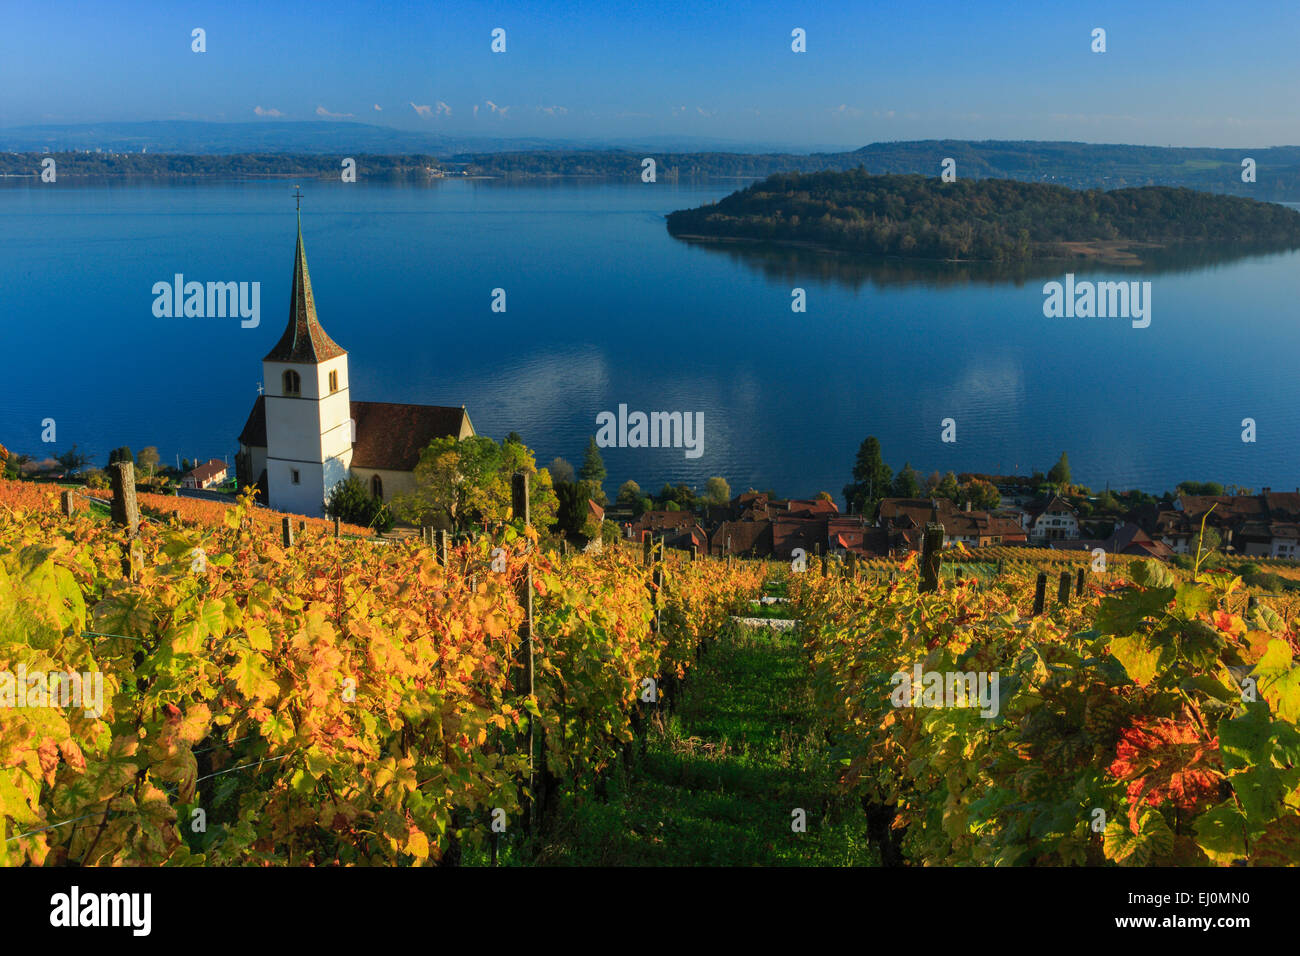 Alps, Alpine, panorama, mountains, mountain panorama, canton Bern, Peter's island, Peter island, lake Biel, autumn, colors, churc Stock Photo